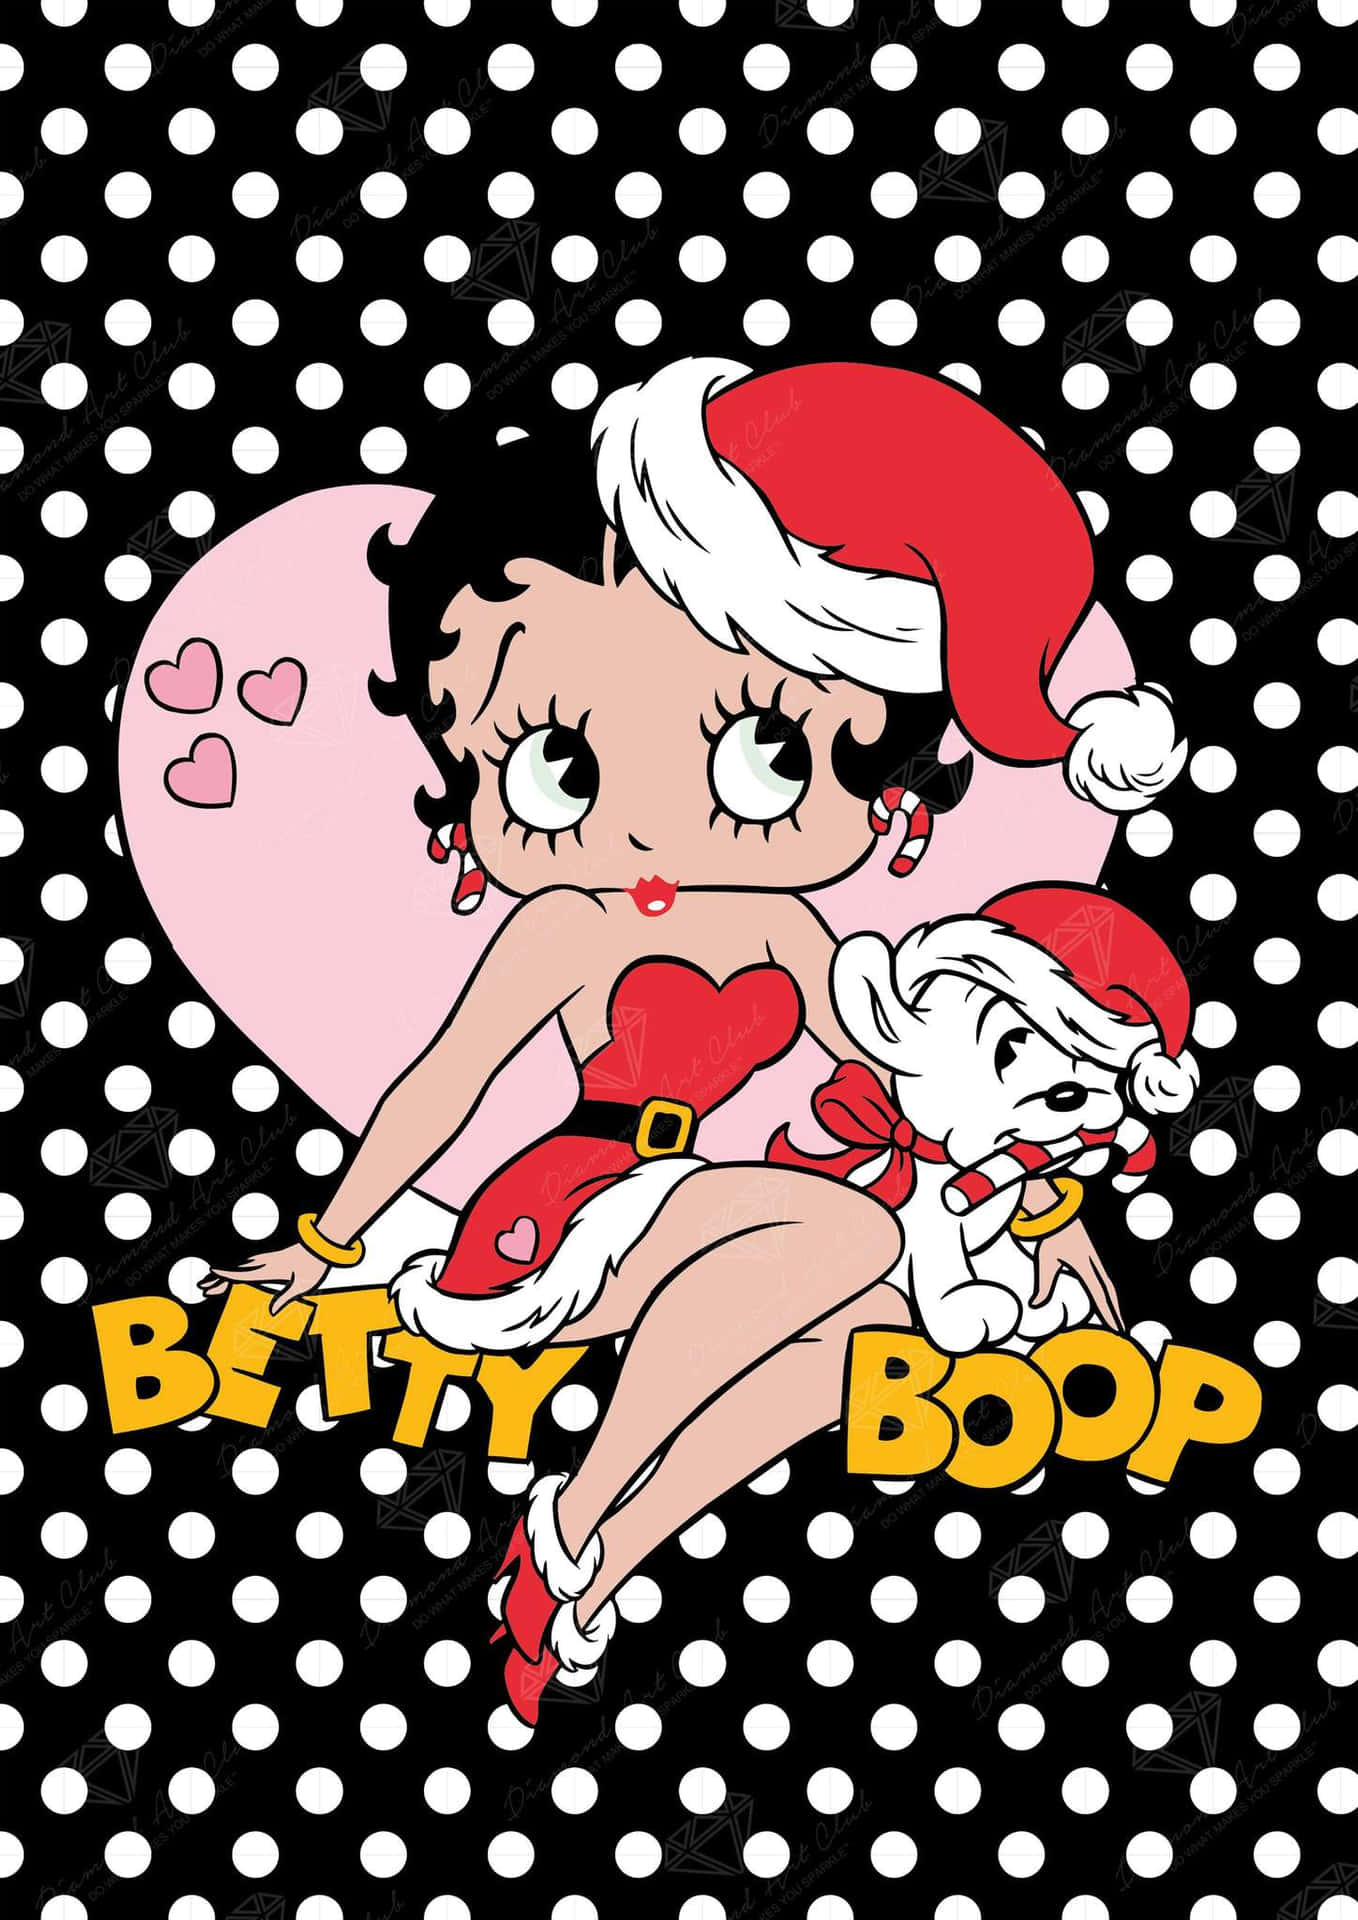 Betty Boop Christmas Wallpaper